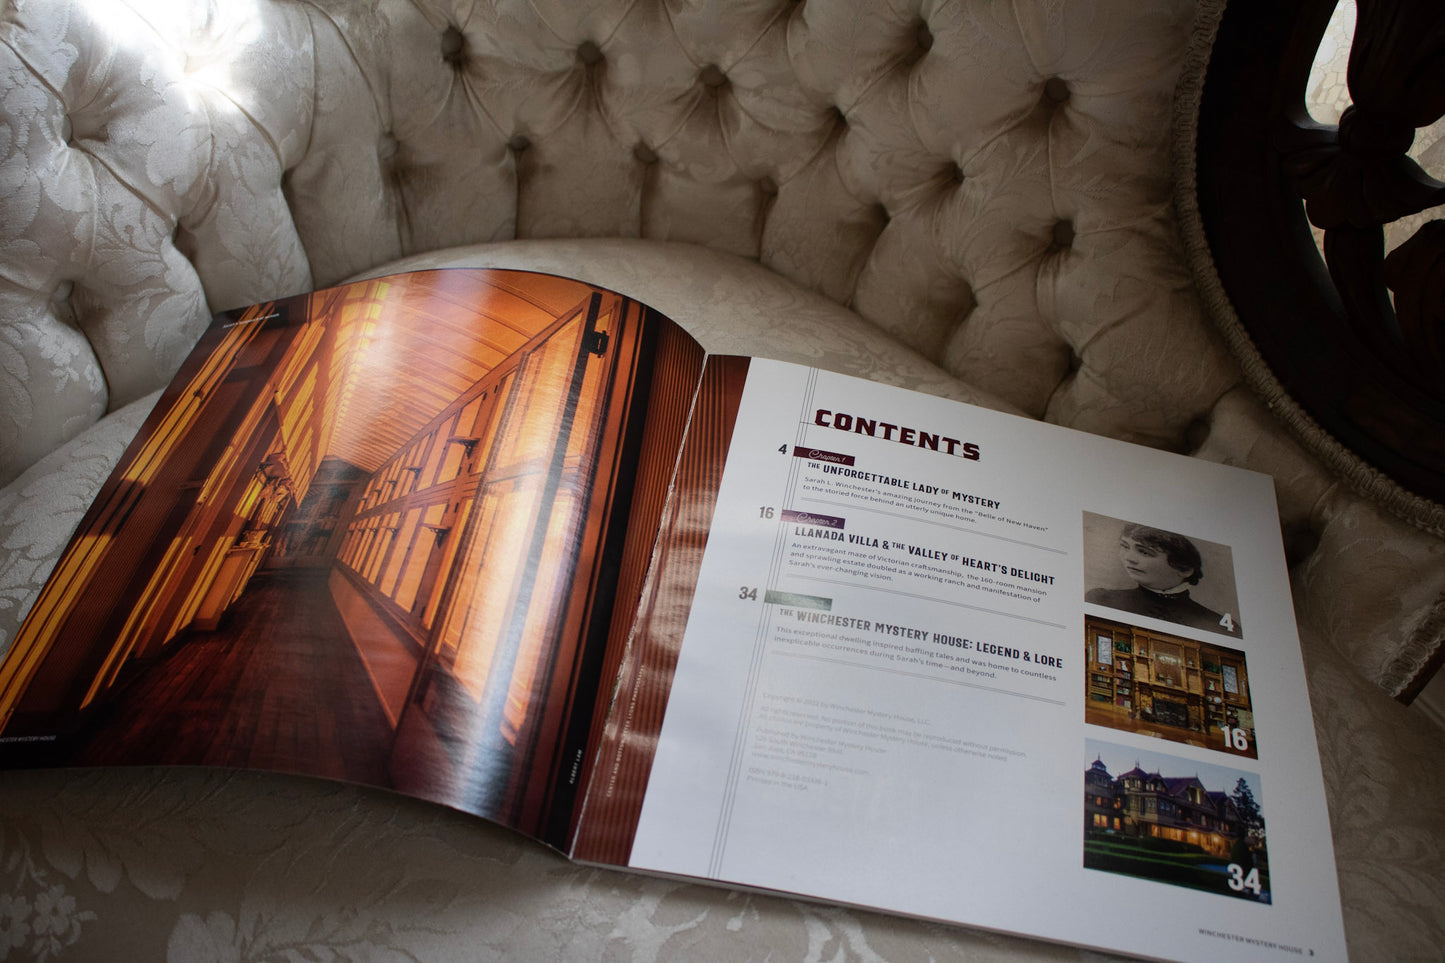 Official Winchester Mystery House Souvenir Book